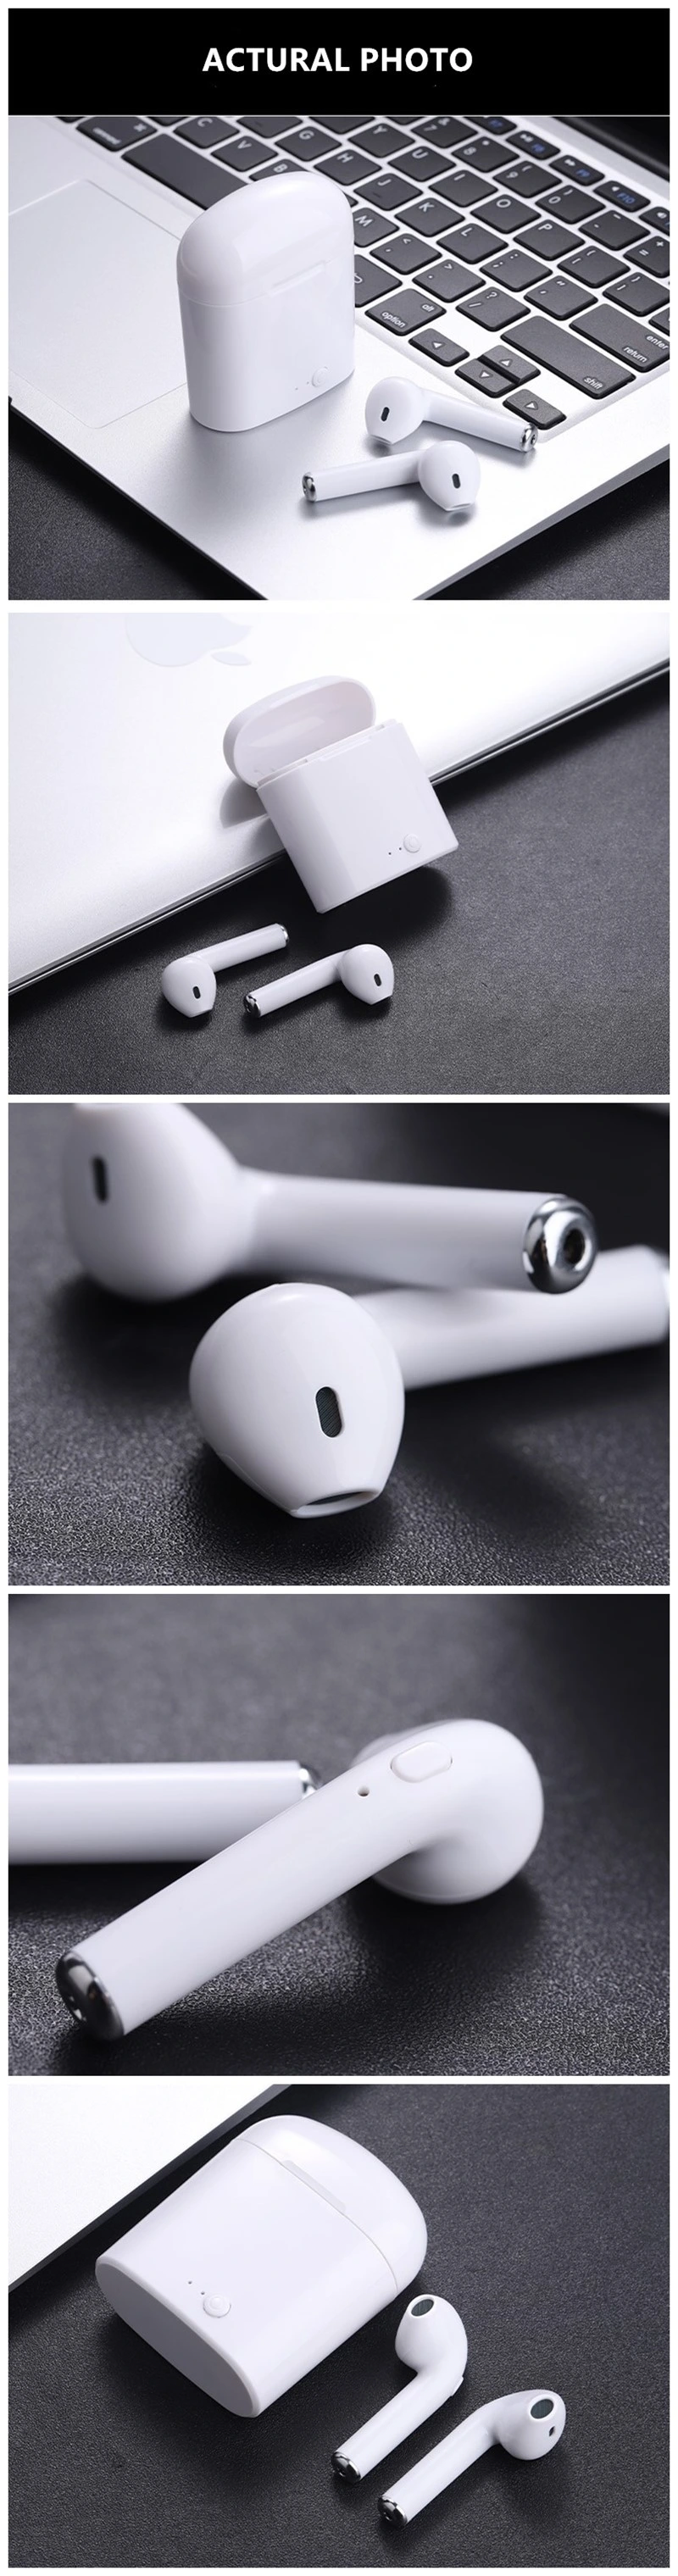 Tws Headphones Bluetooth 5.0 Air Pods Touch Control Wireless Earphones